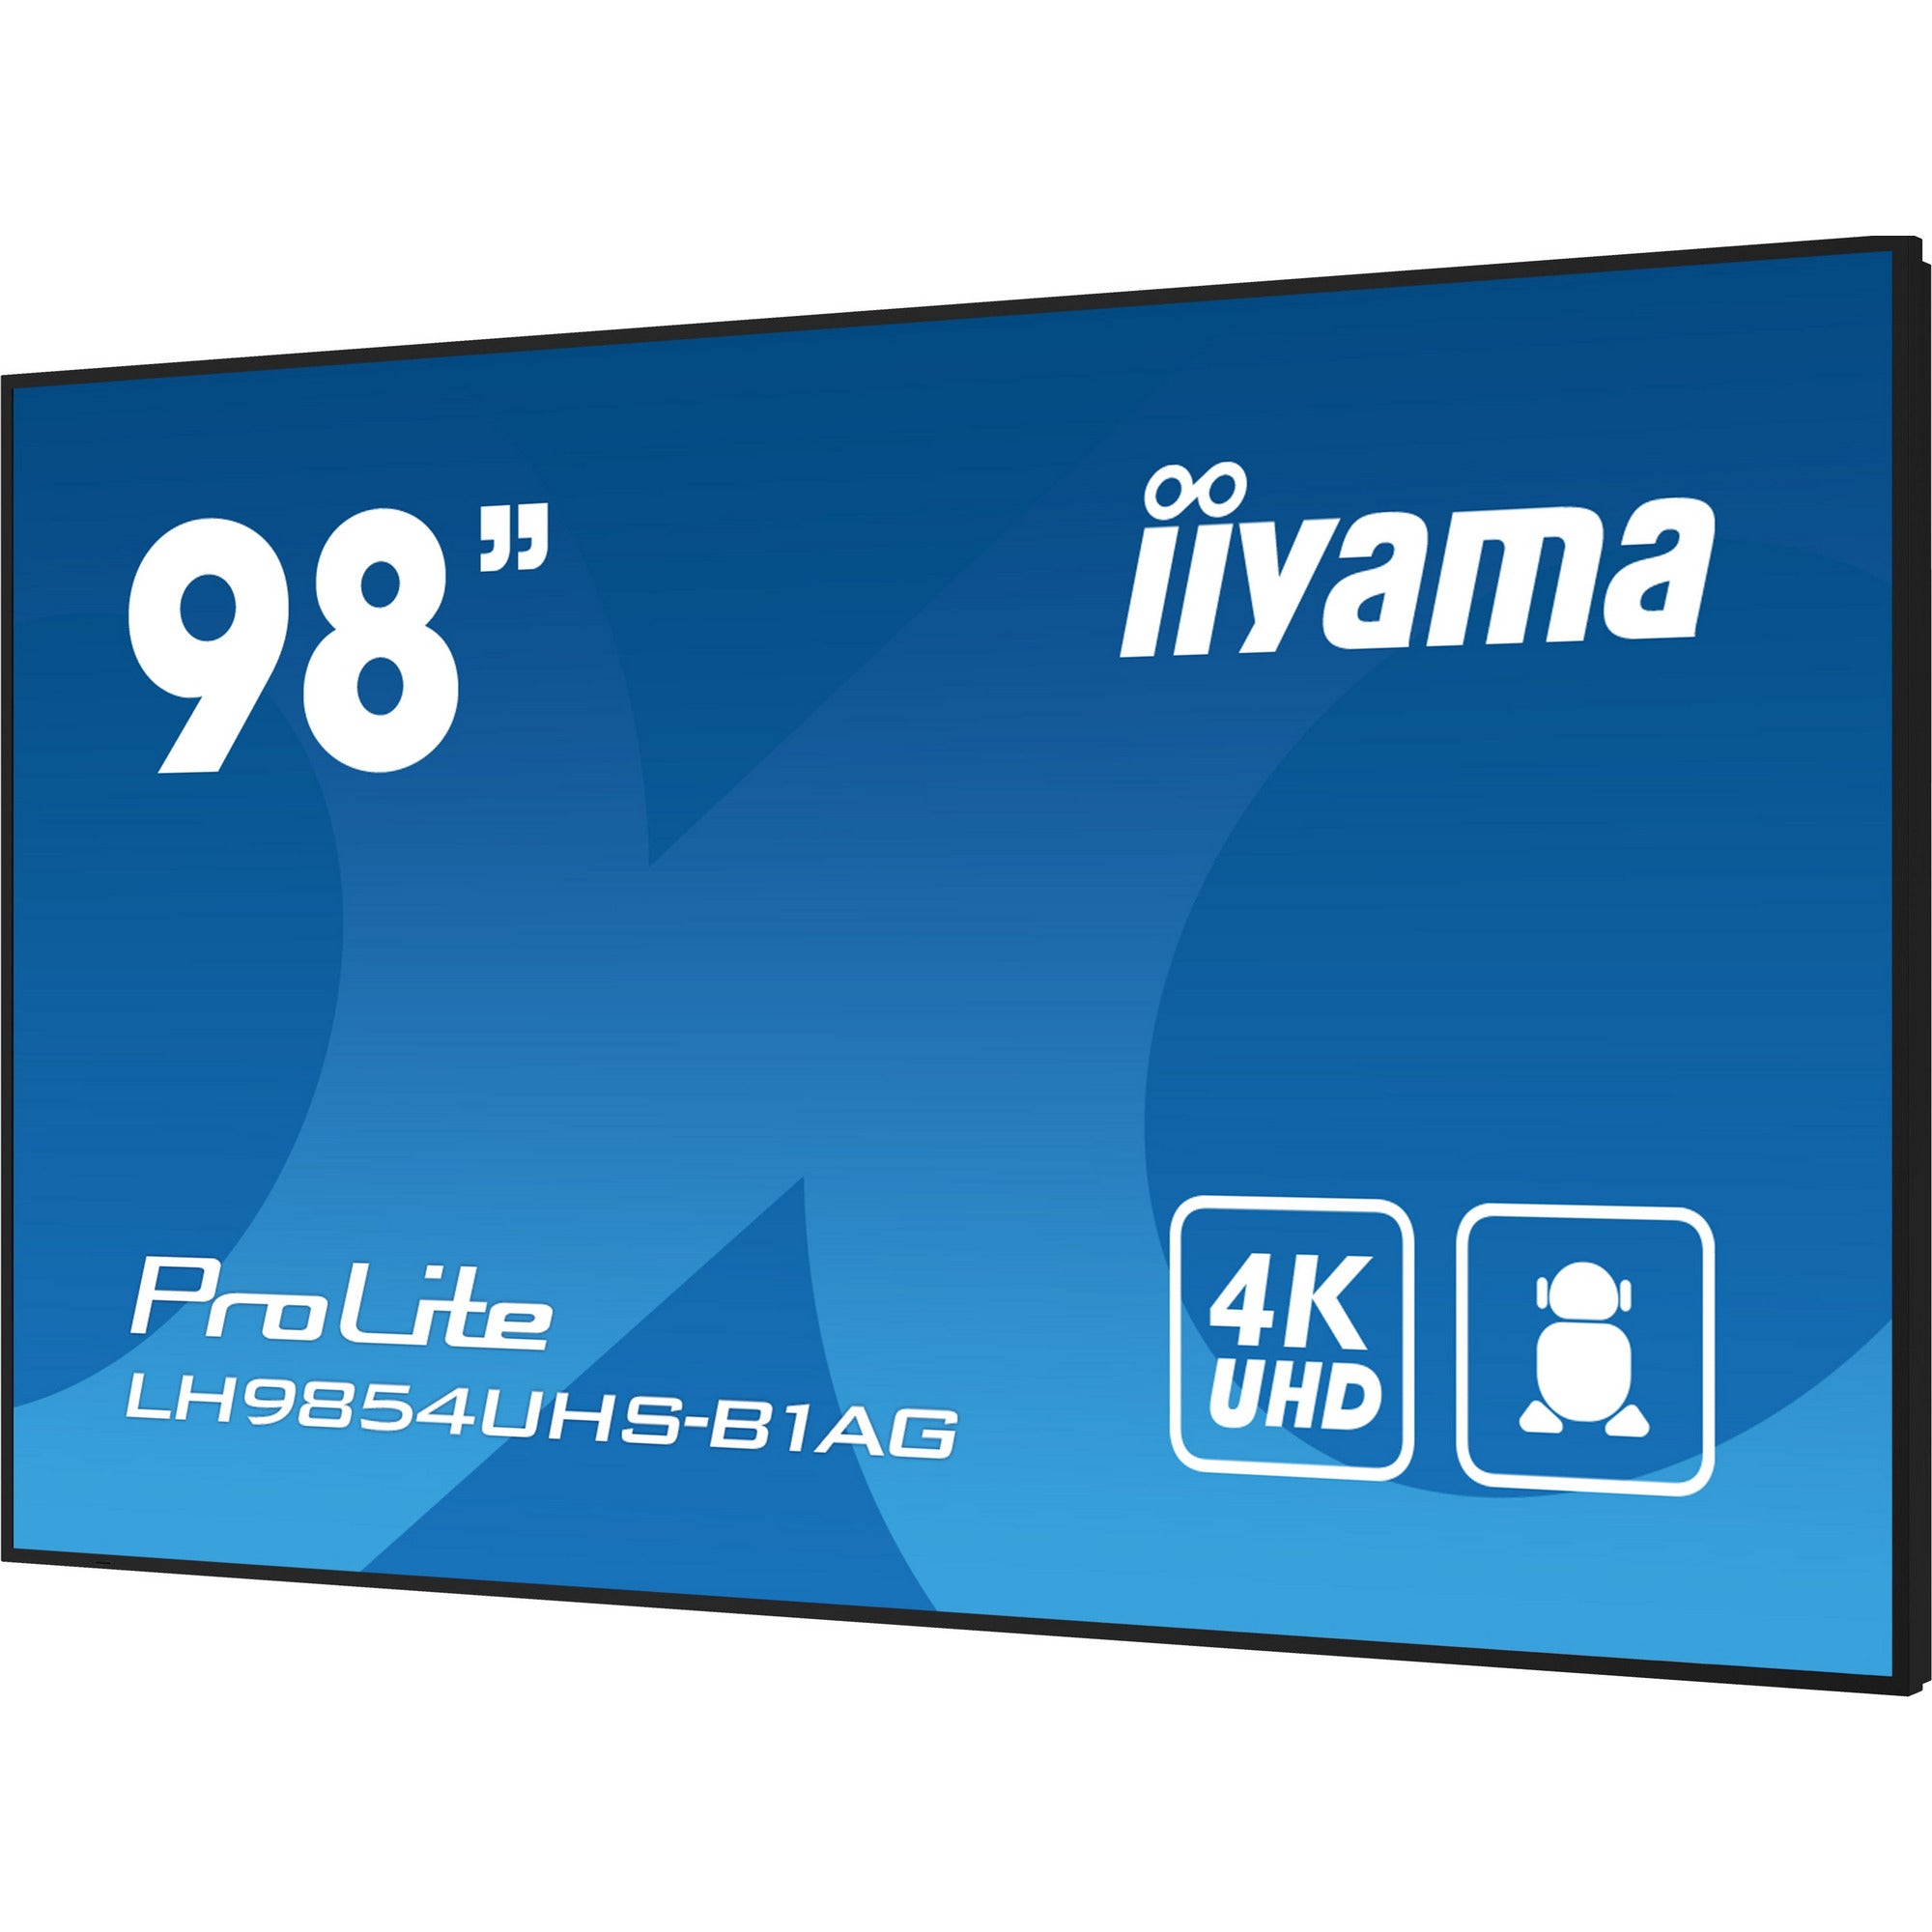 iiyama ProLite LH9854UHS-B1AG 98" 24/7 IPS 4K Large Format Monitor with onboard iiSignage2 CMS